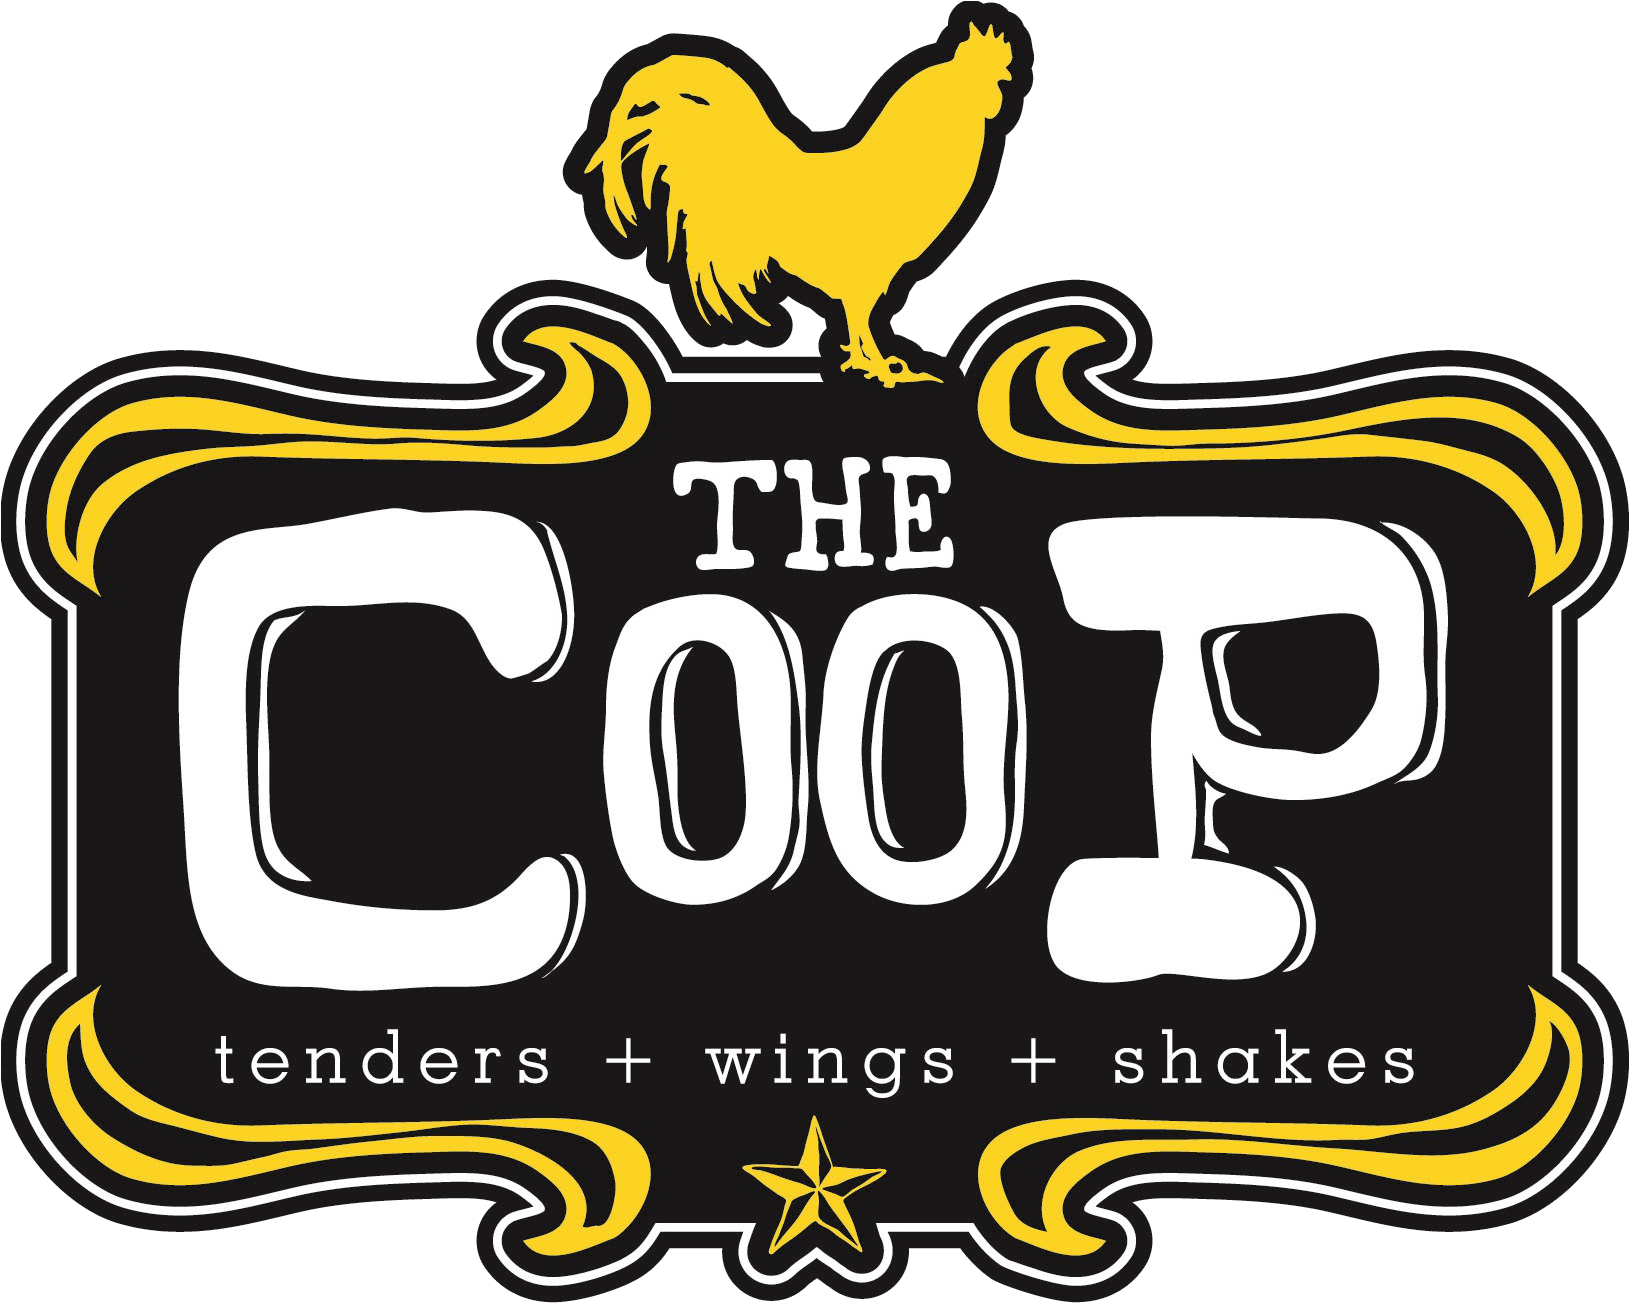 The Coop - The Coop (1641x1309)